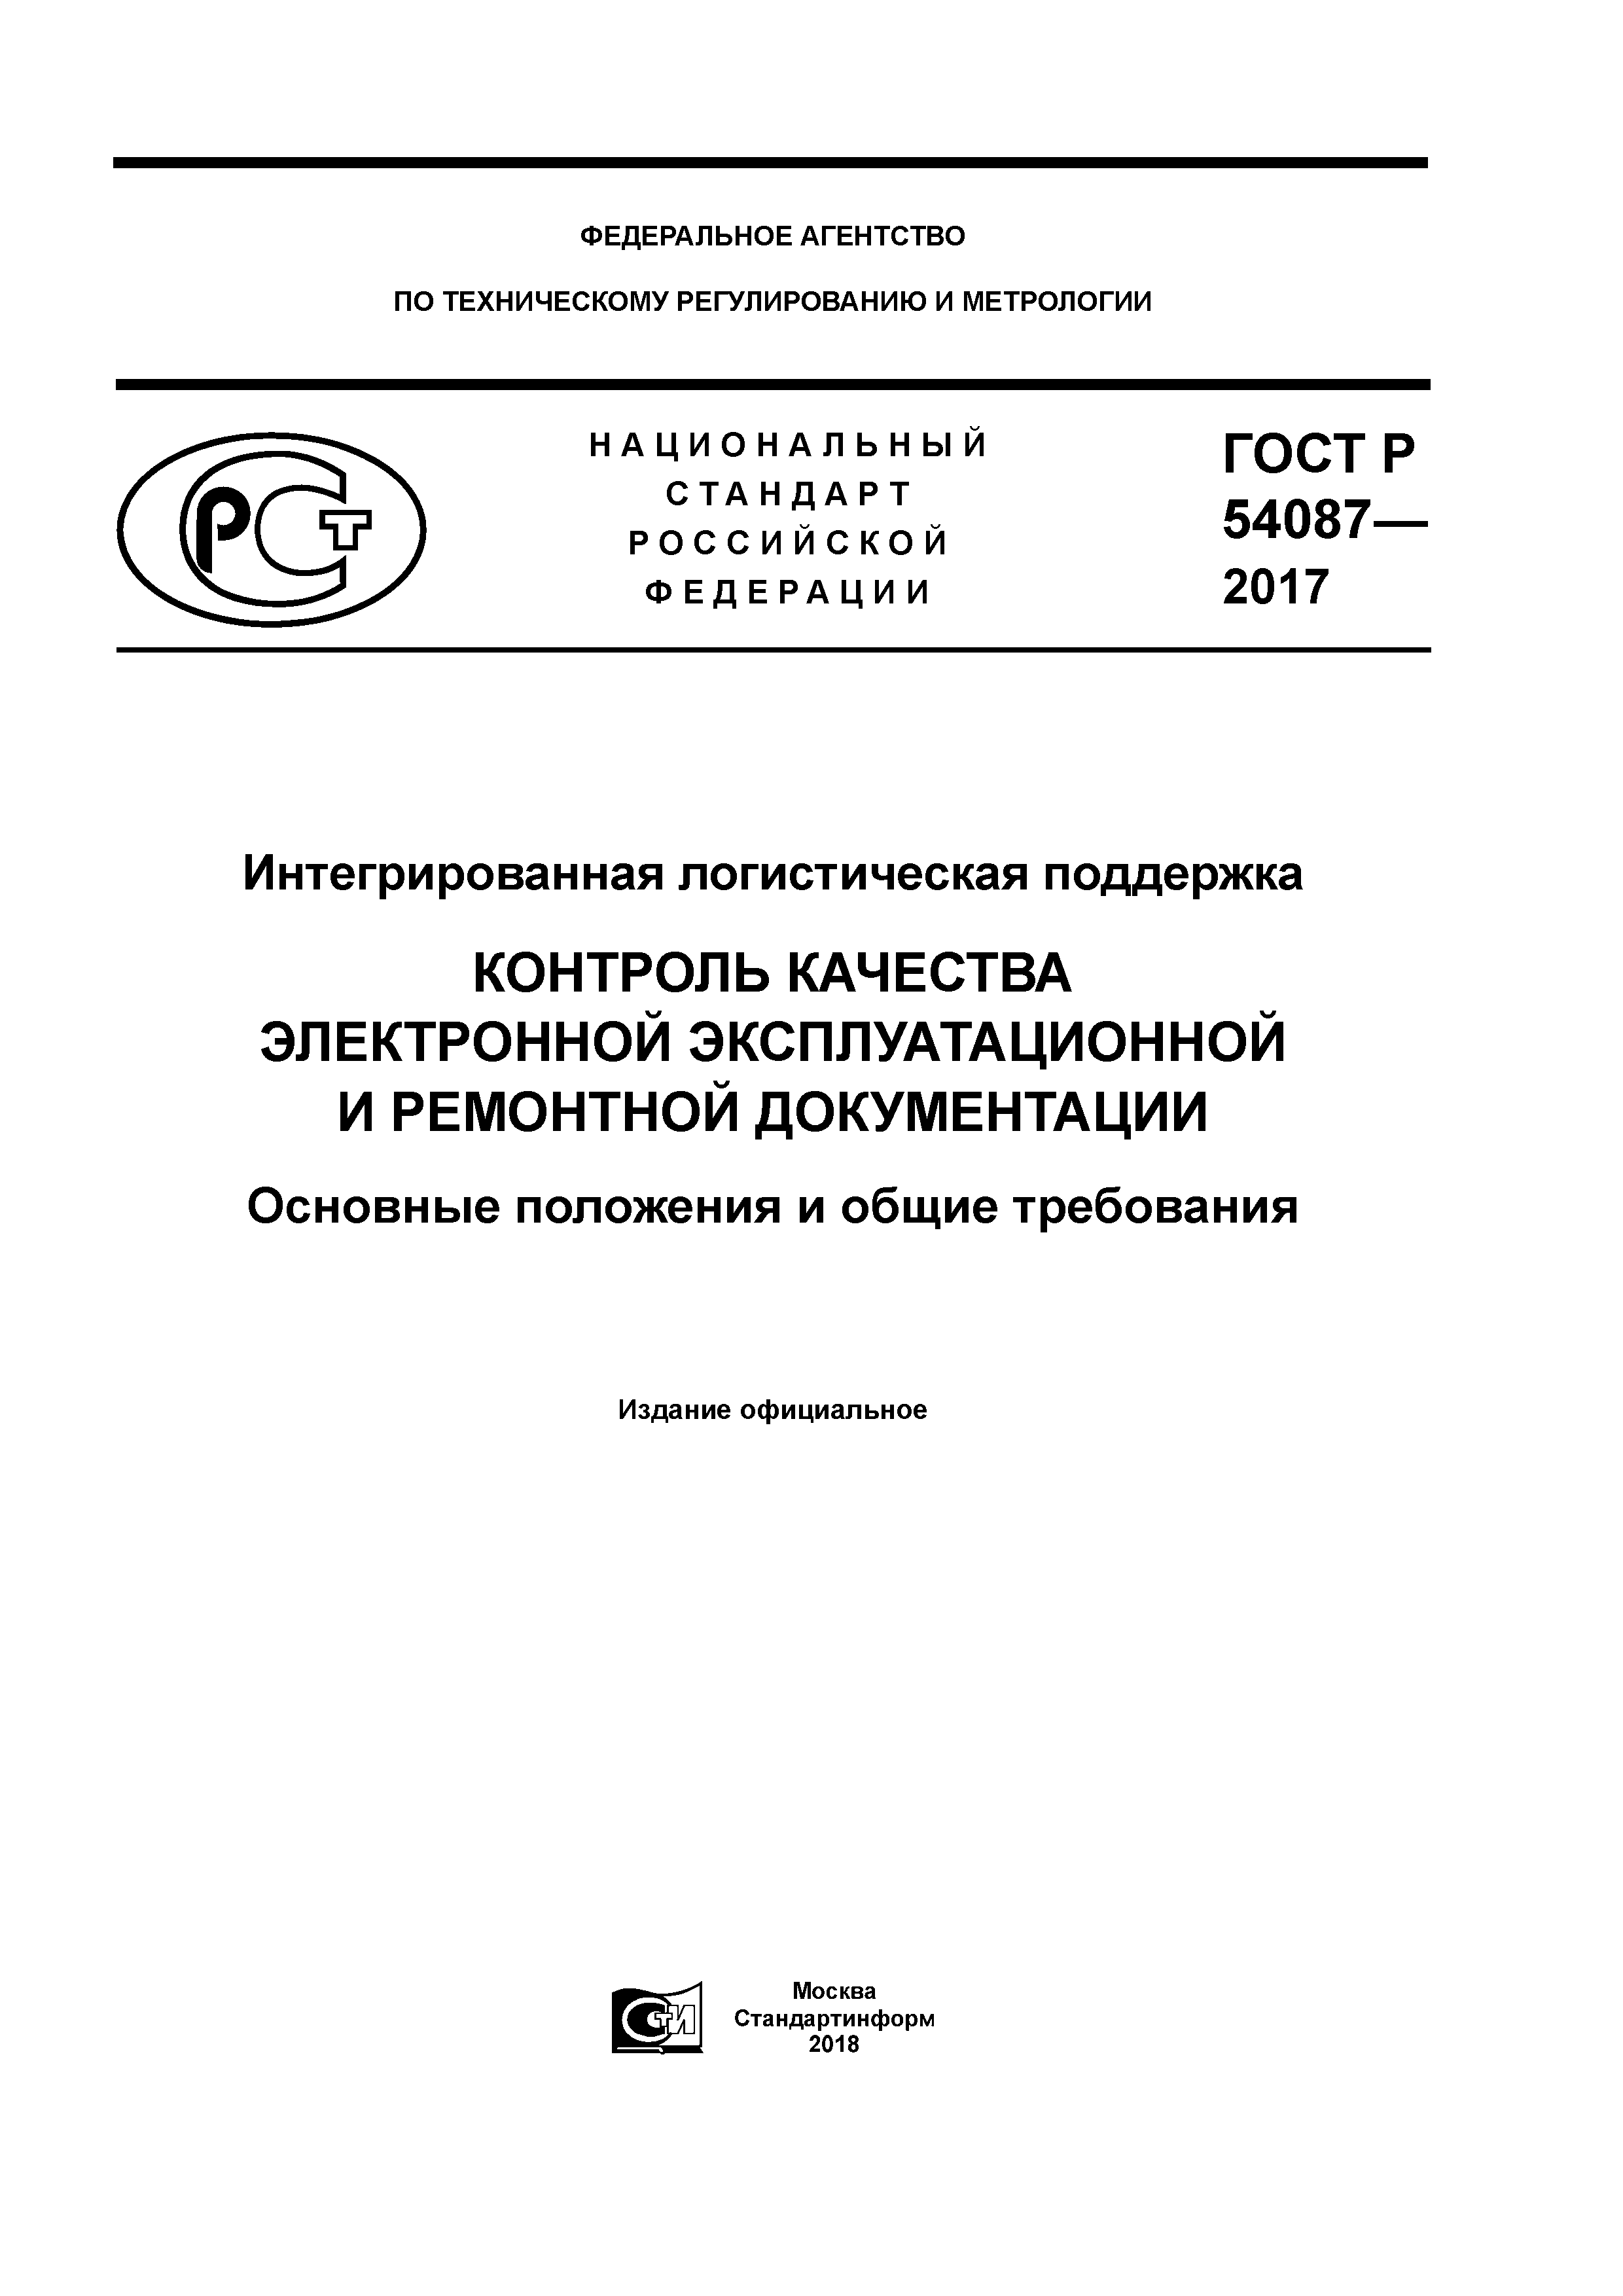 ГОСТ Р 54087-2017